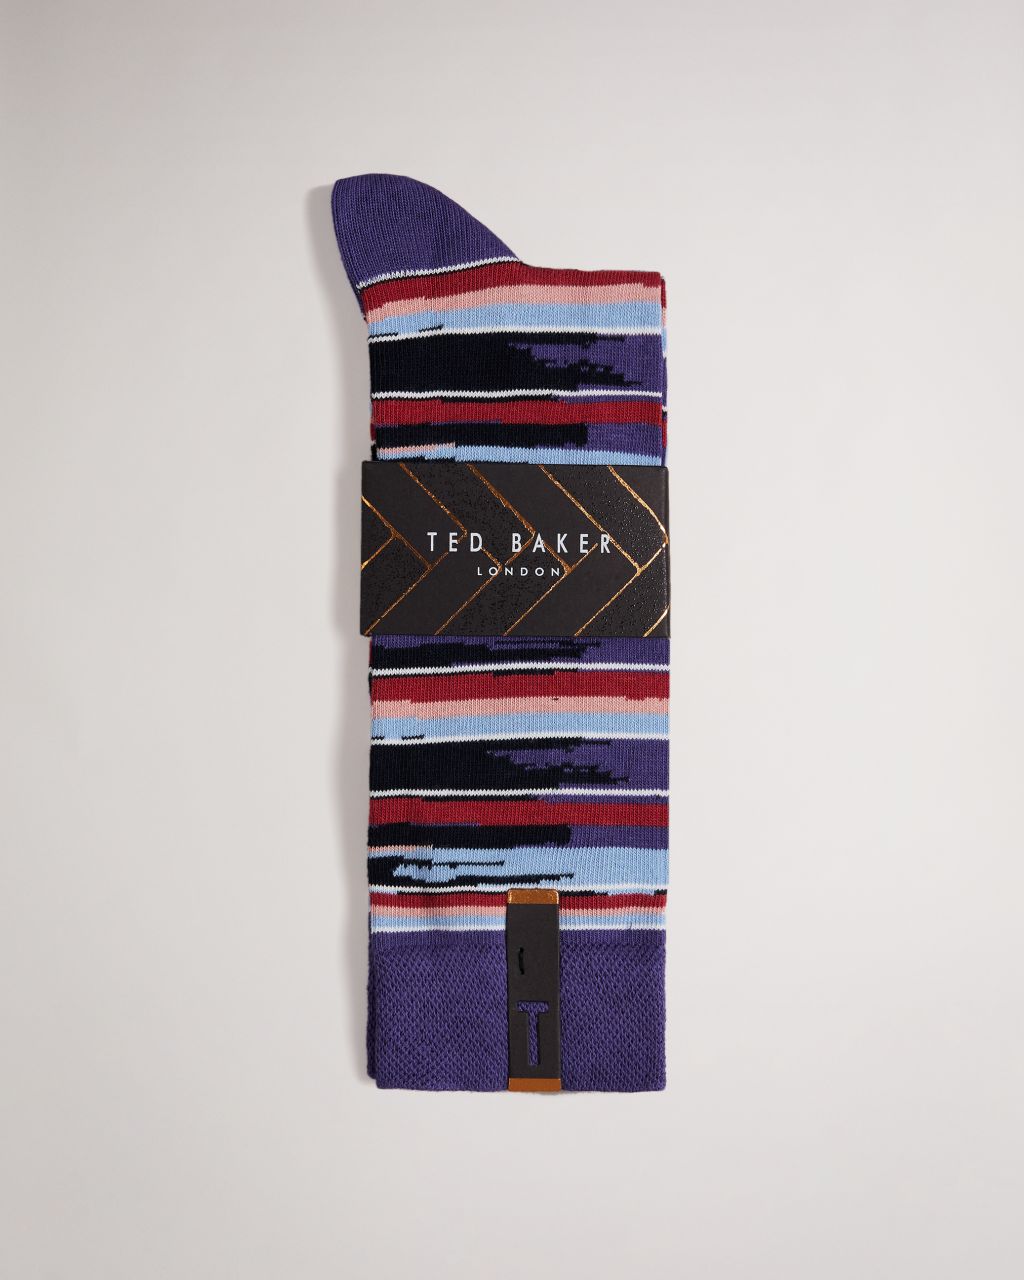 Ted Baker Men's Striped Socks in Blue, Stryped